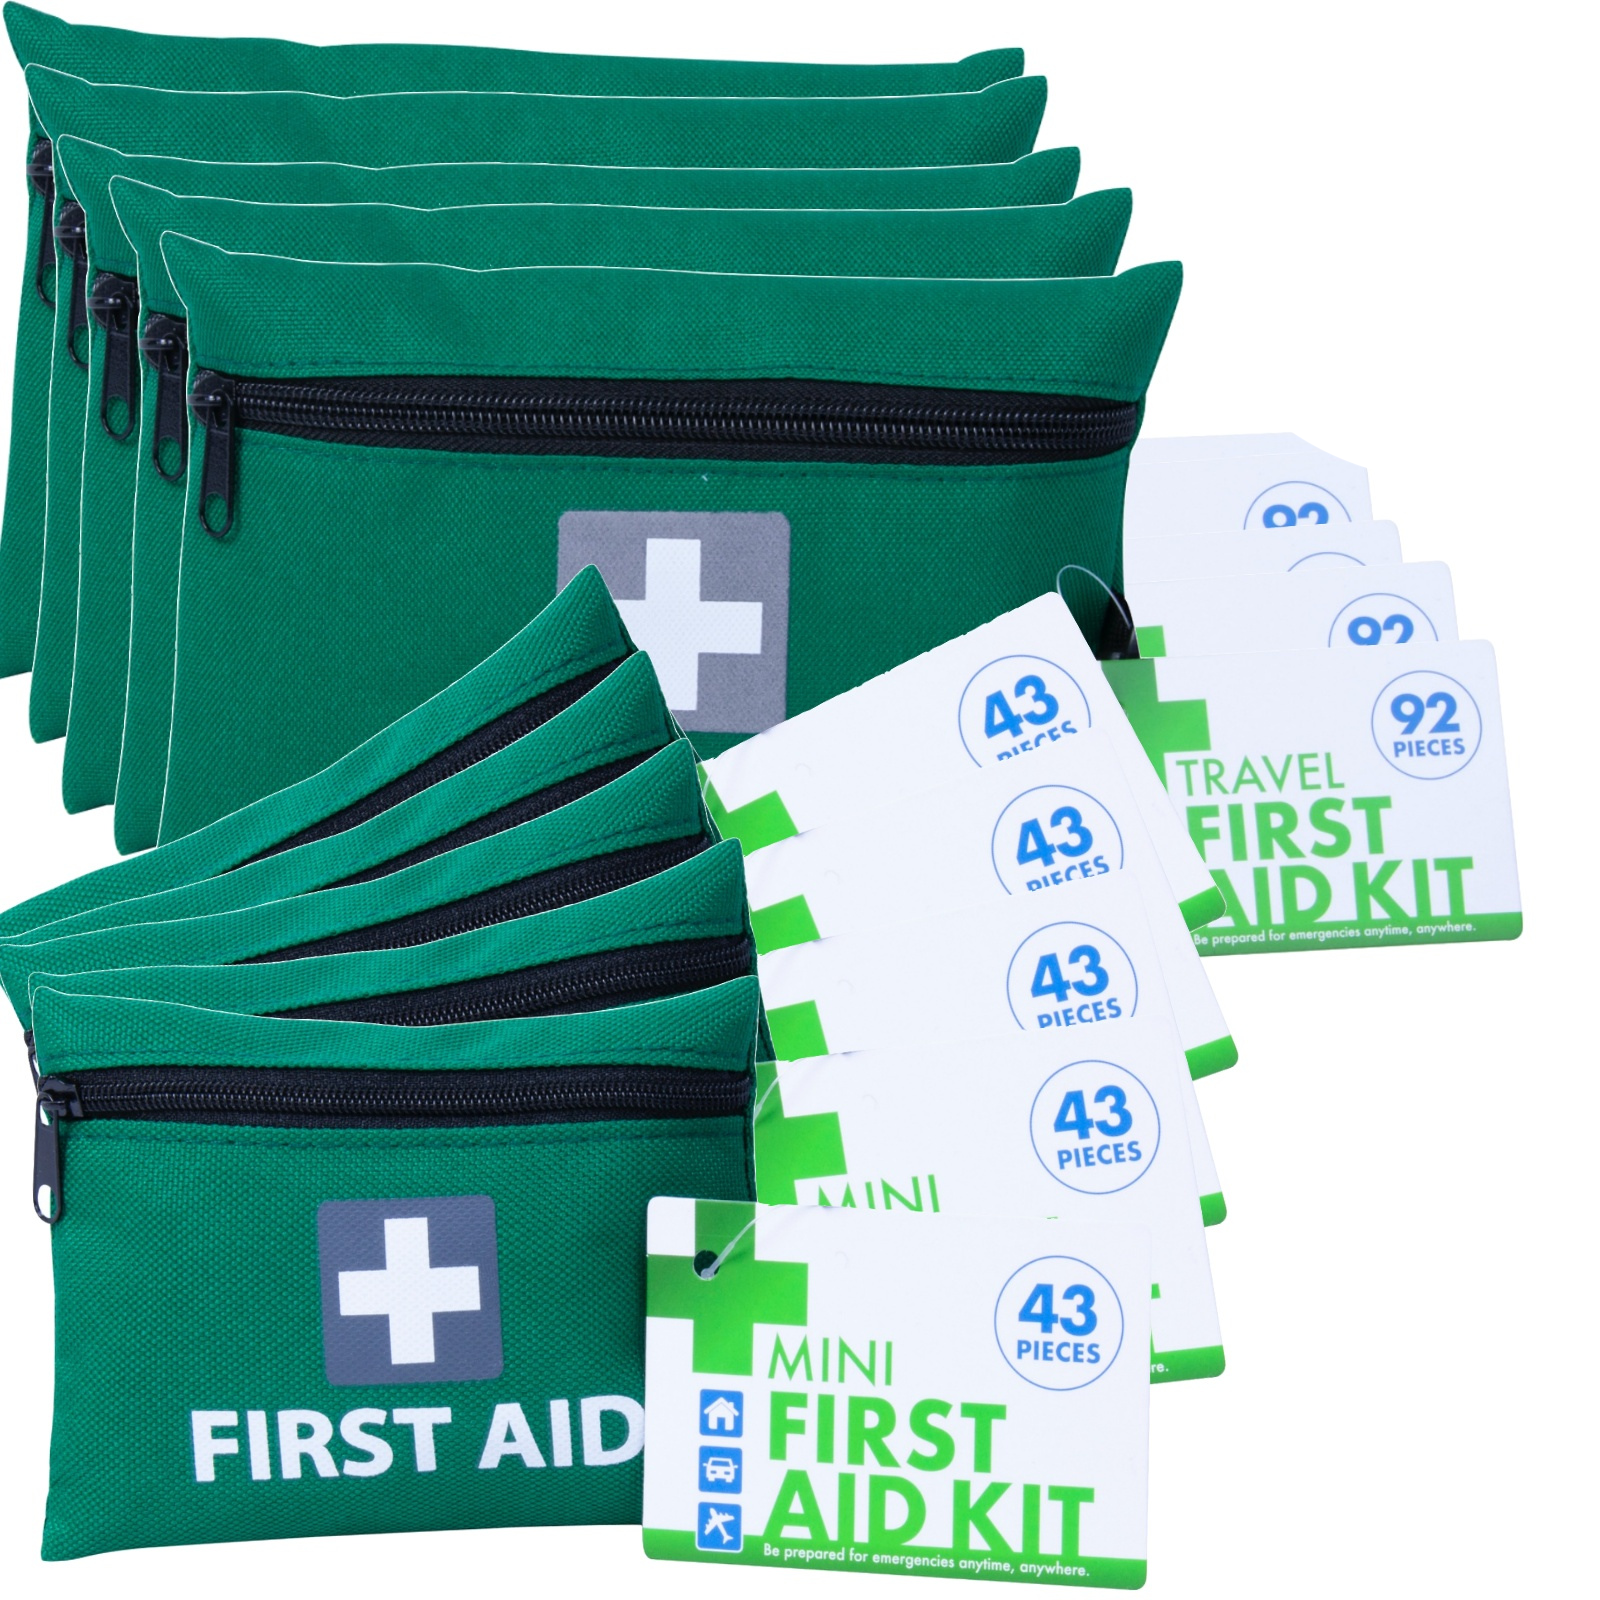 Mini-Emergency Kit Tags, 3 Styles – Something Turquoise Digital